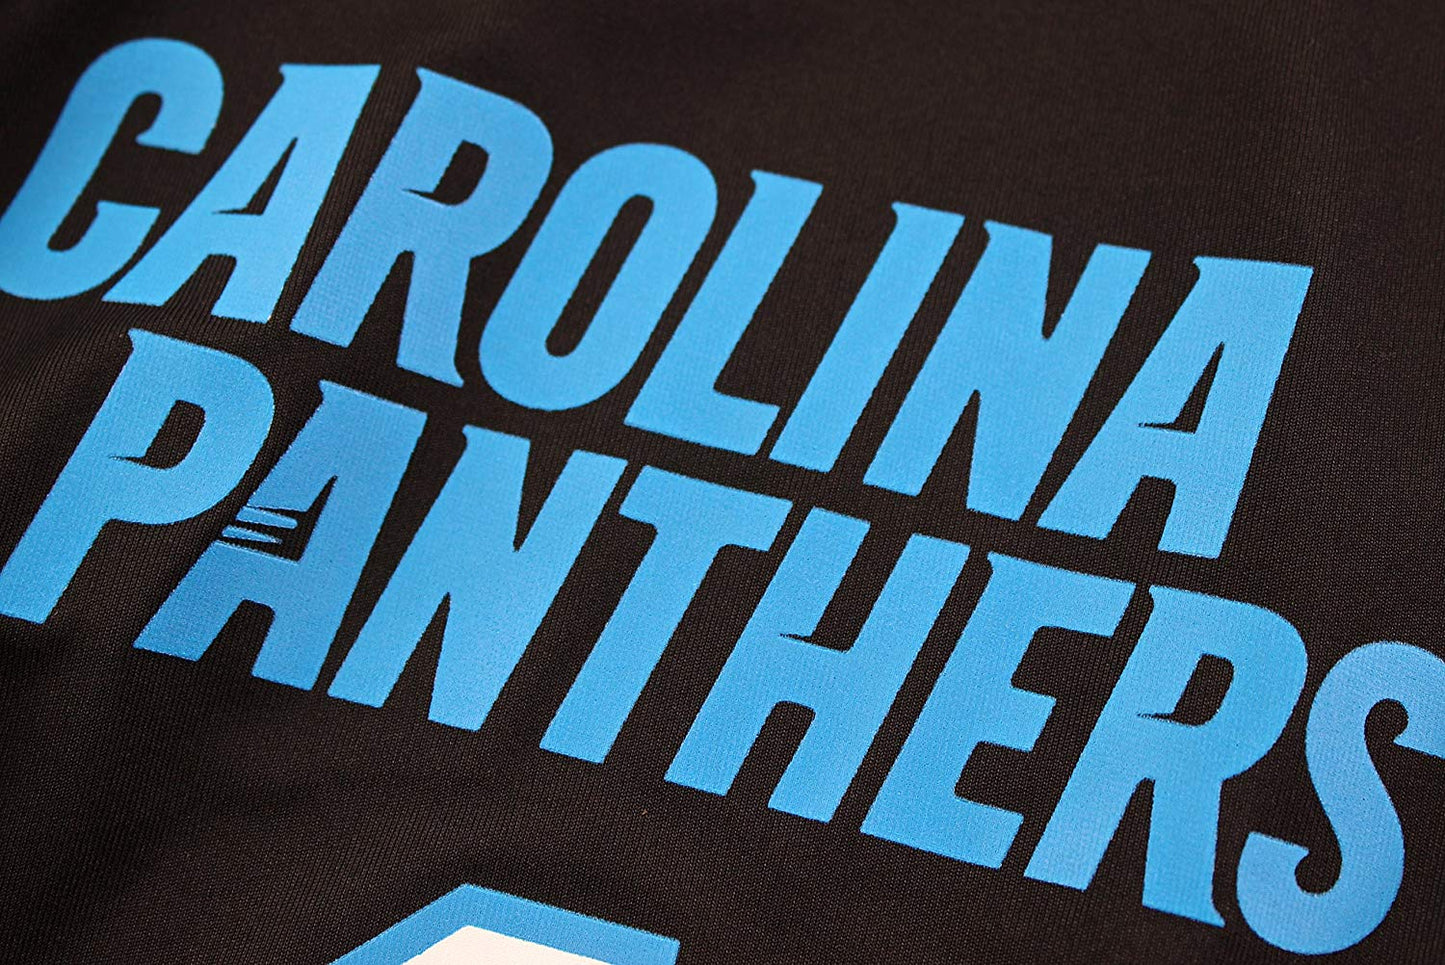 Cam Newton Carolina Panthers #1 NFL Youth Mainliner Name & Number T-Shirt